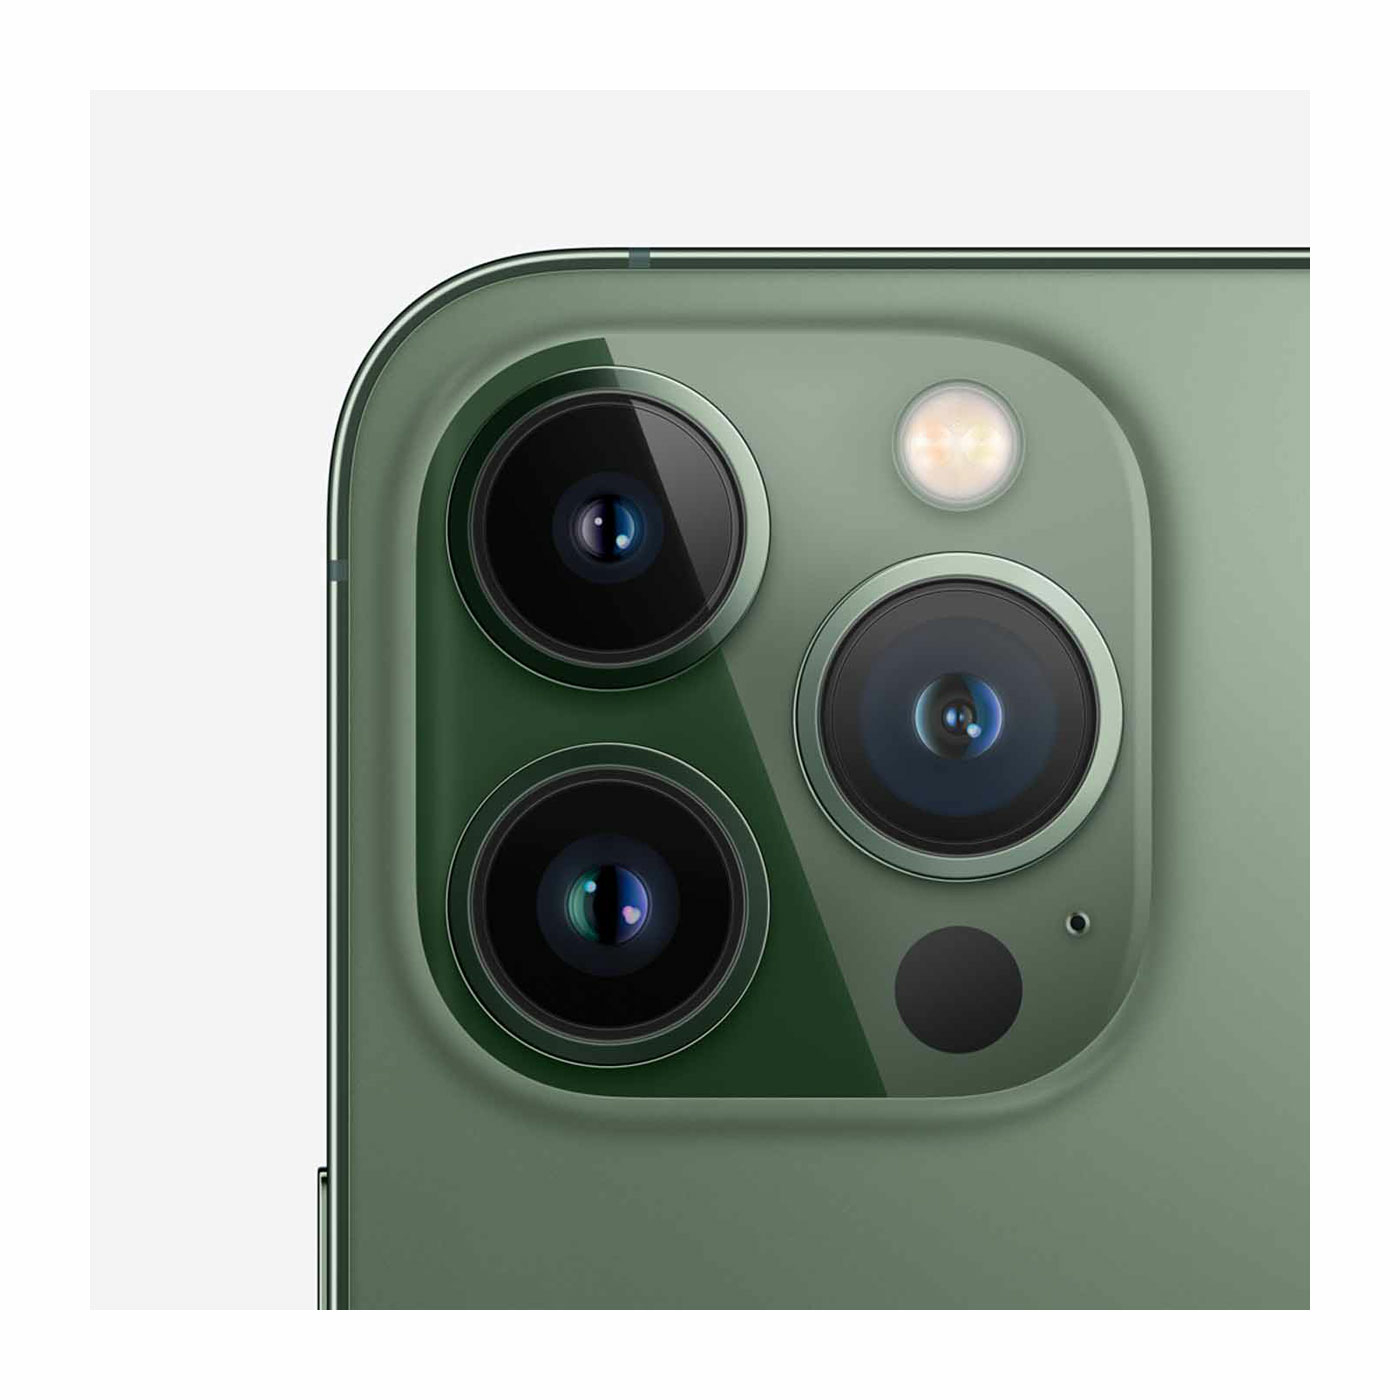 iPhone 13 Pro 128GB Verde Alpino